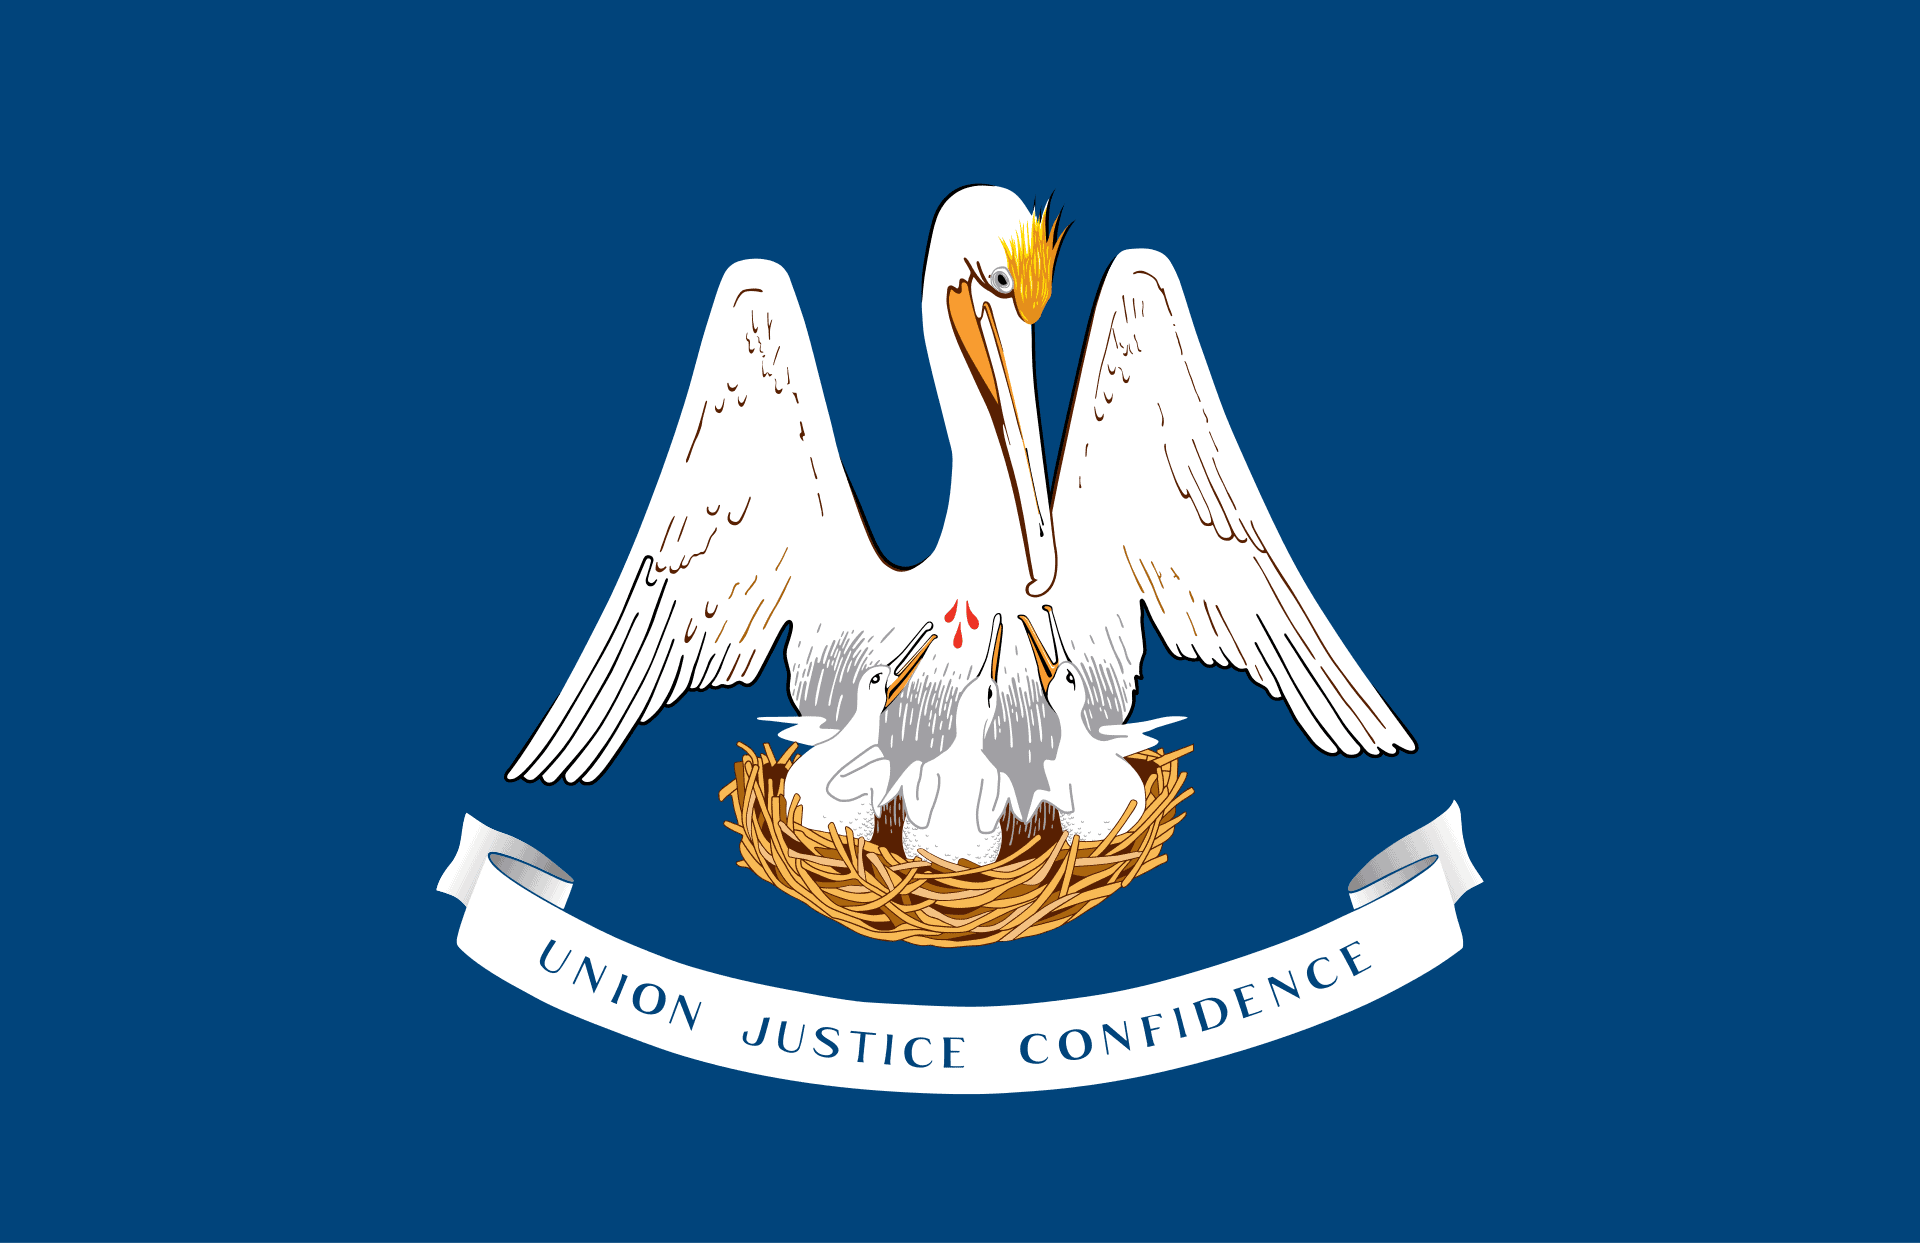 Flag_of_Louisiana